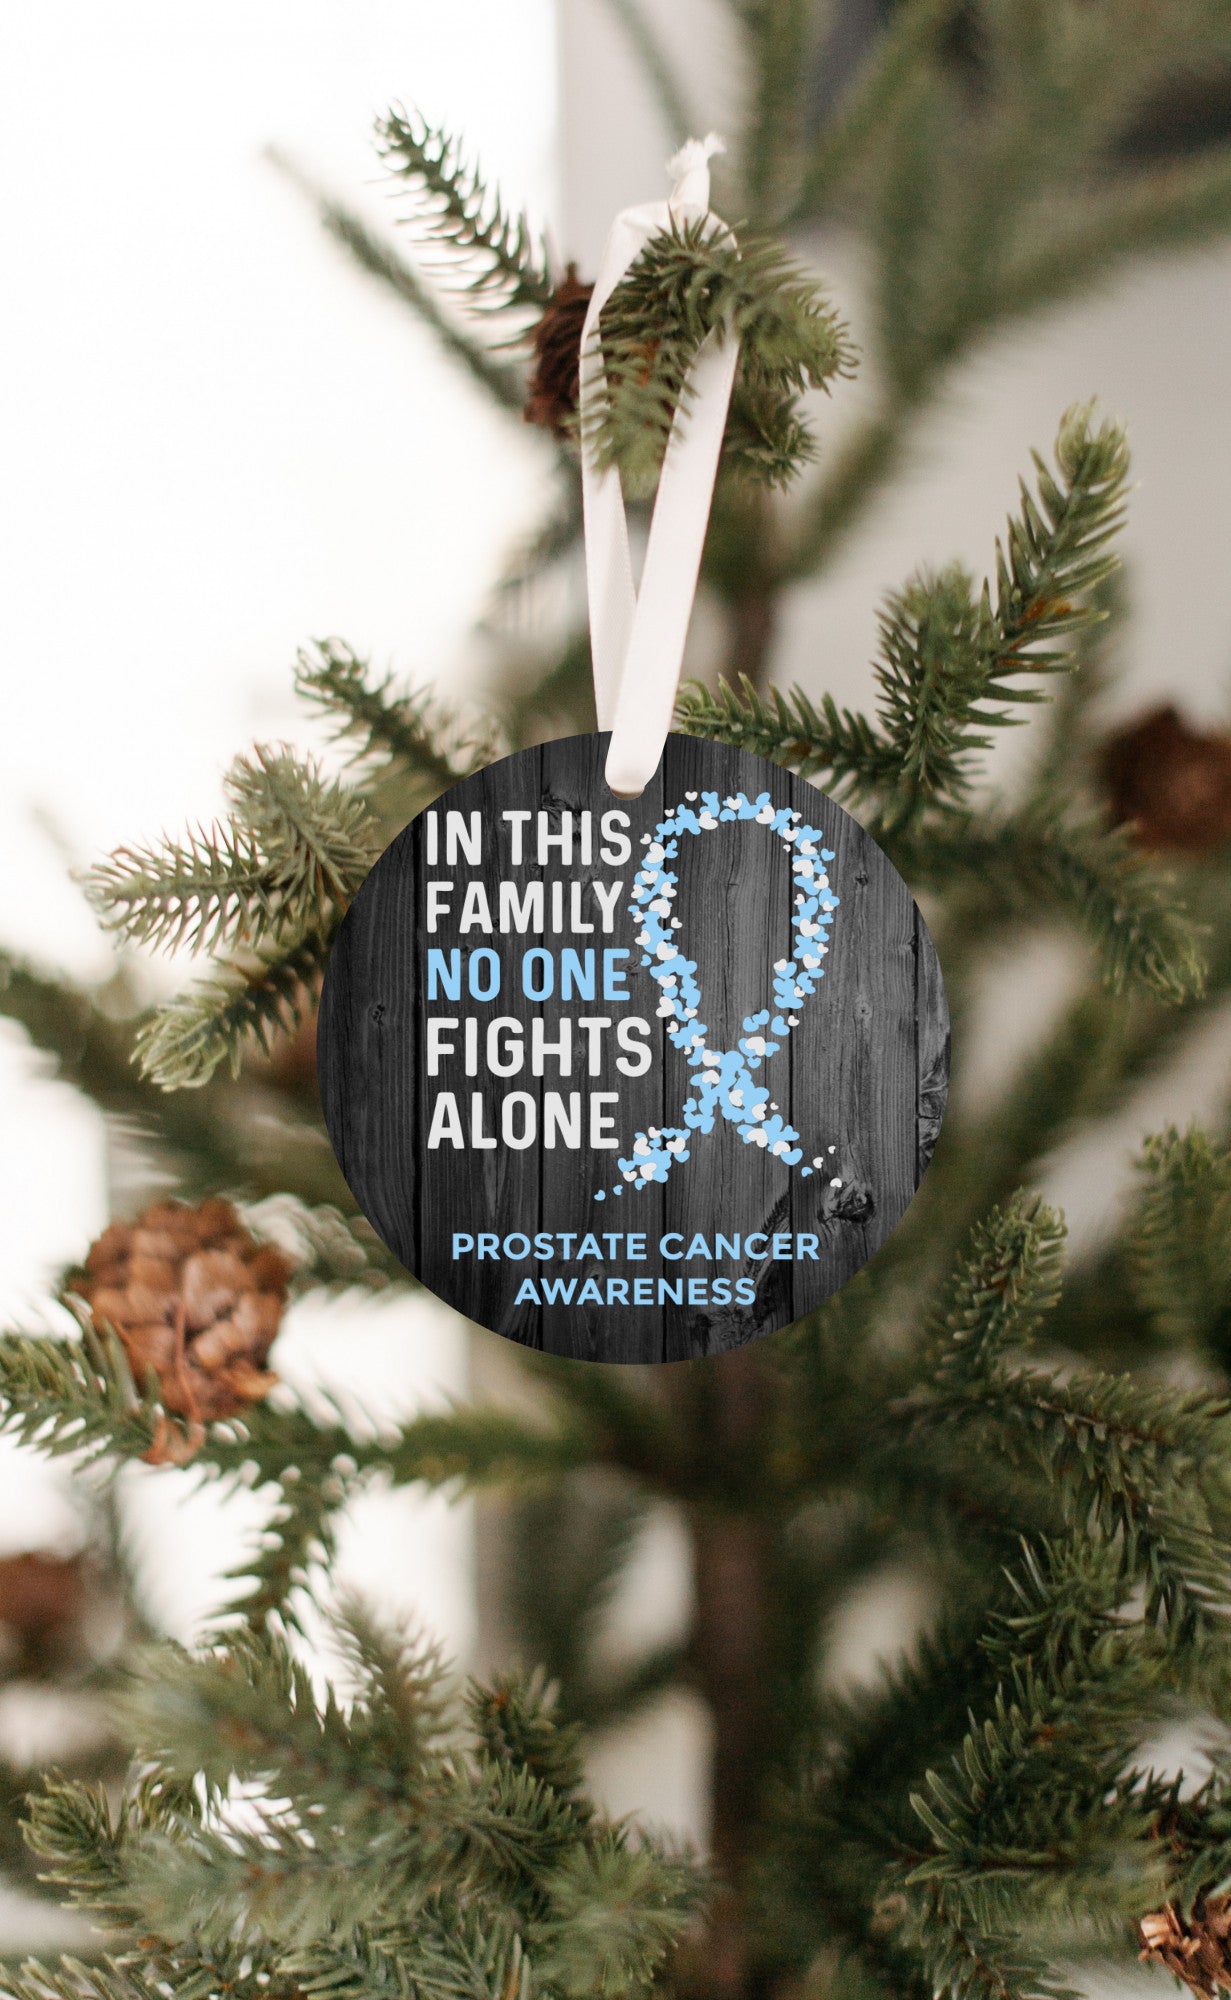 Prostate Cancer Awareness Ornament